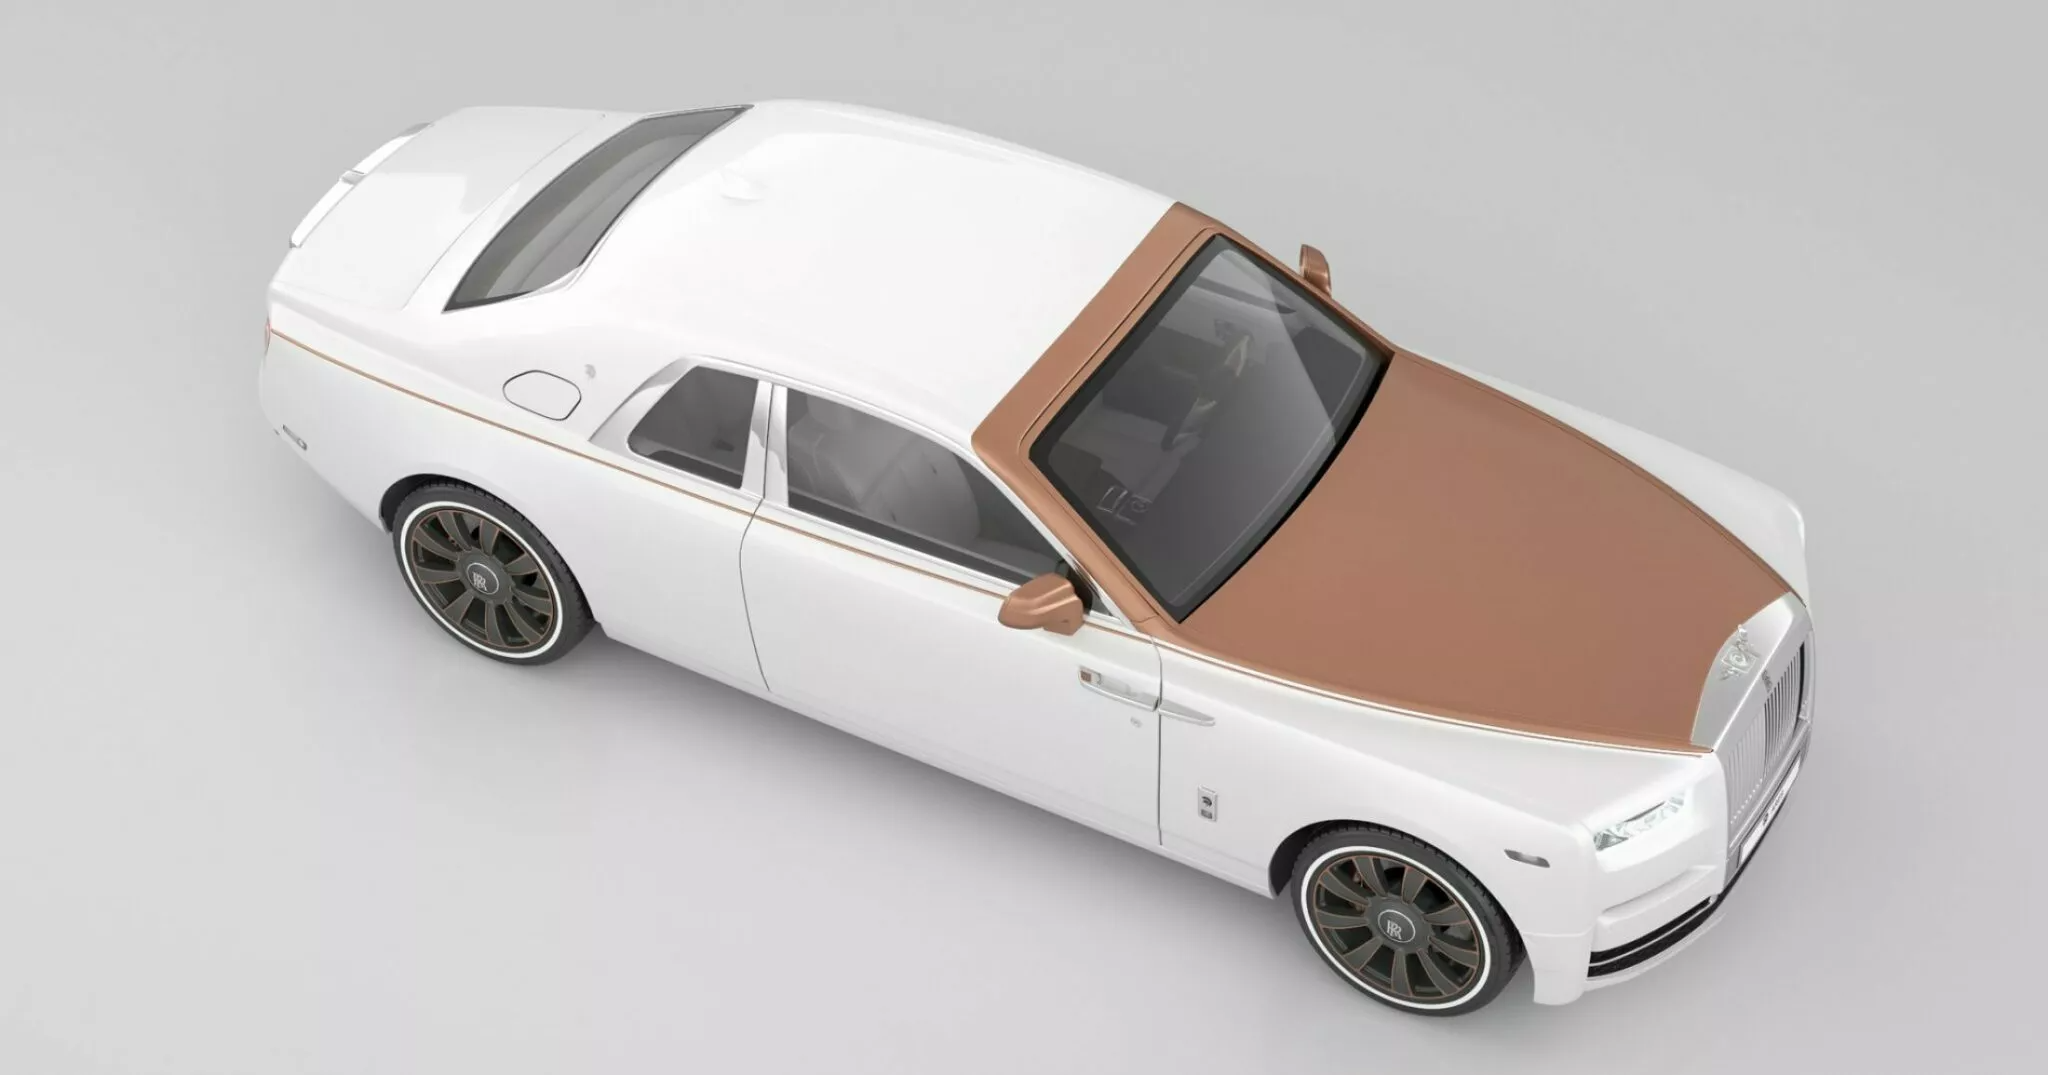 The Bespoke Coachline: Символ изысканного мастерства ручной работы Rolls-Royce Motor Cars